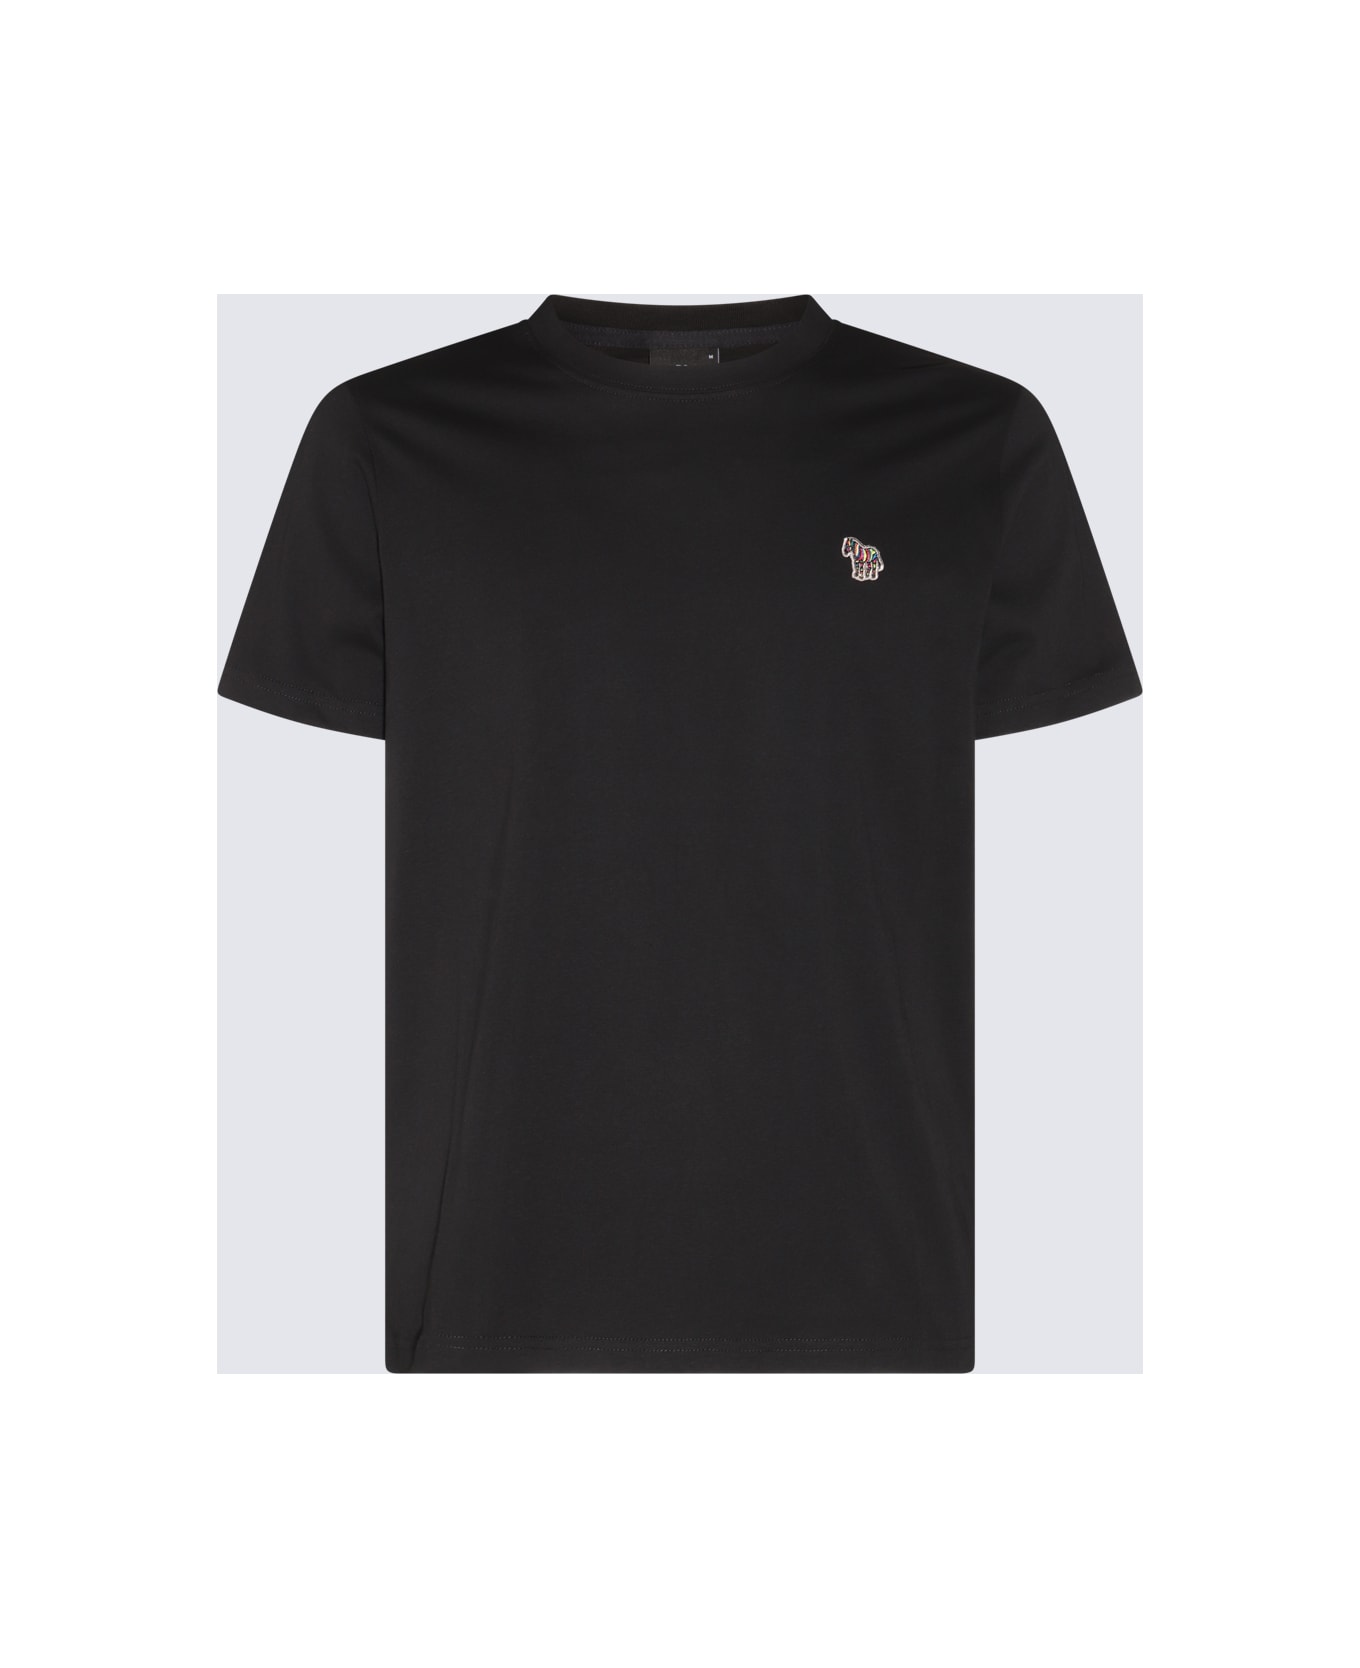 PS by Paul Smith Black Cotton T-shirt - BLACK